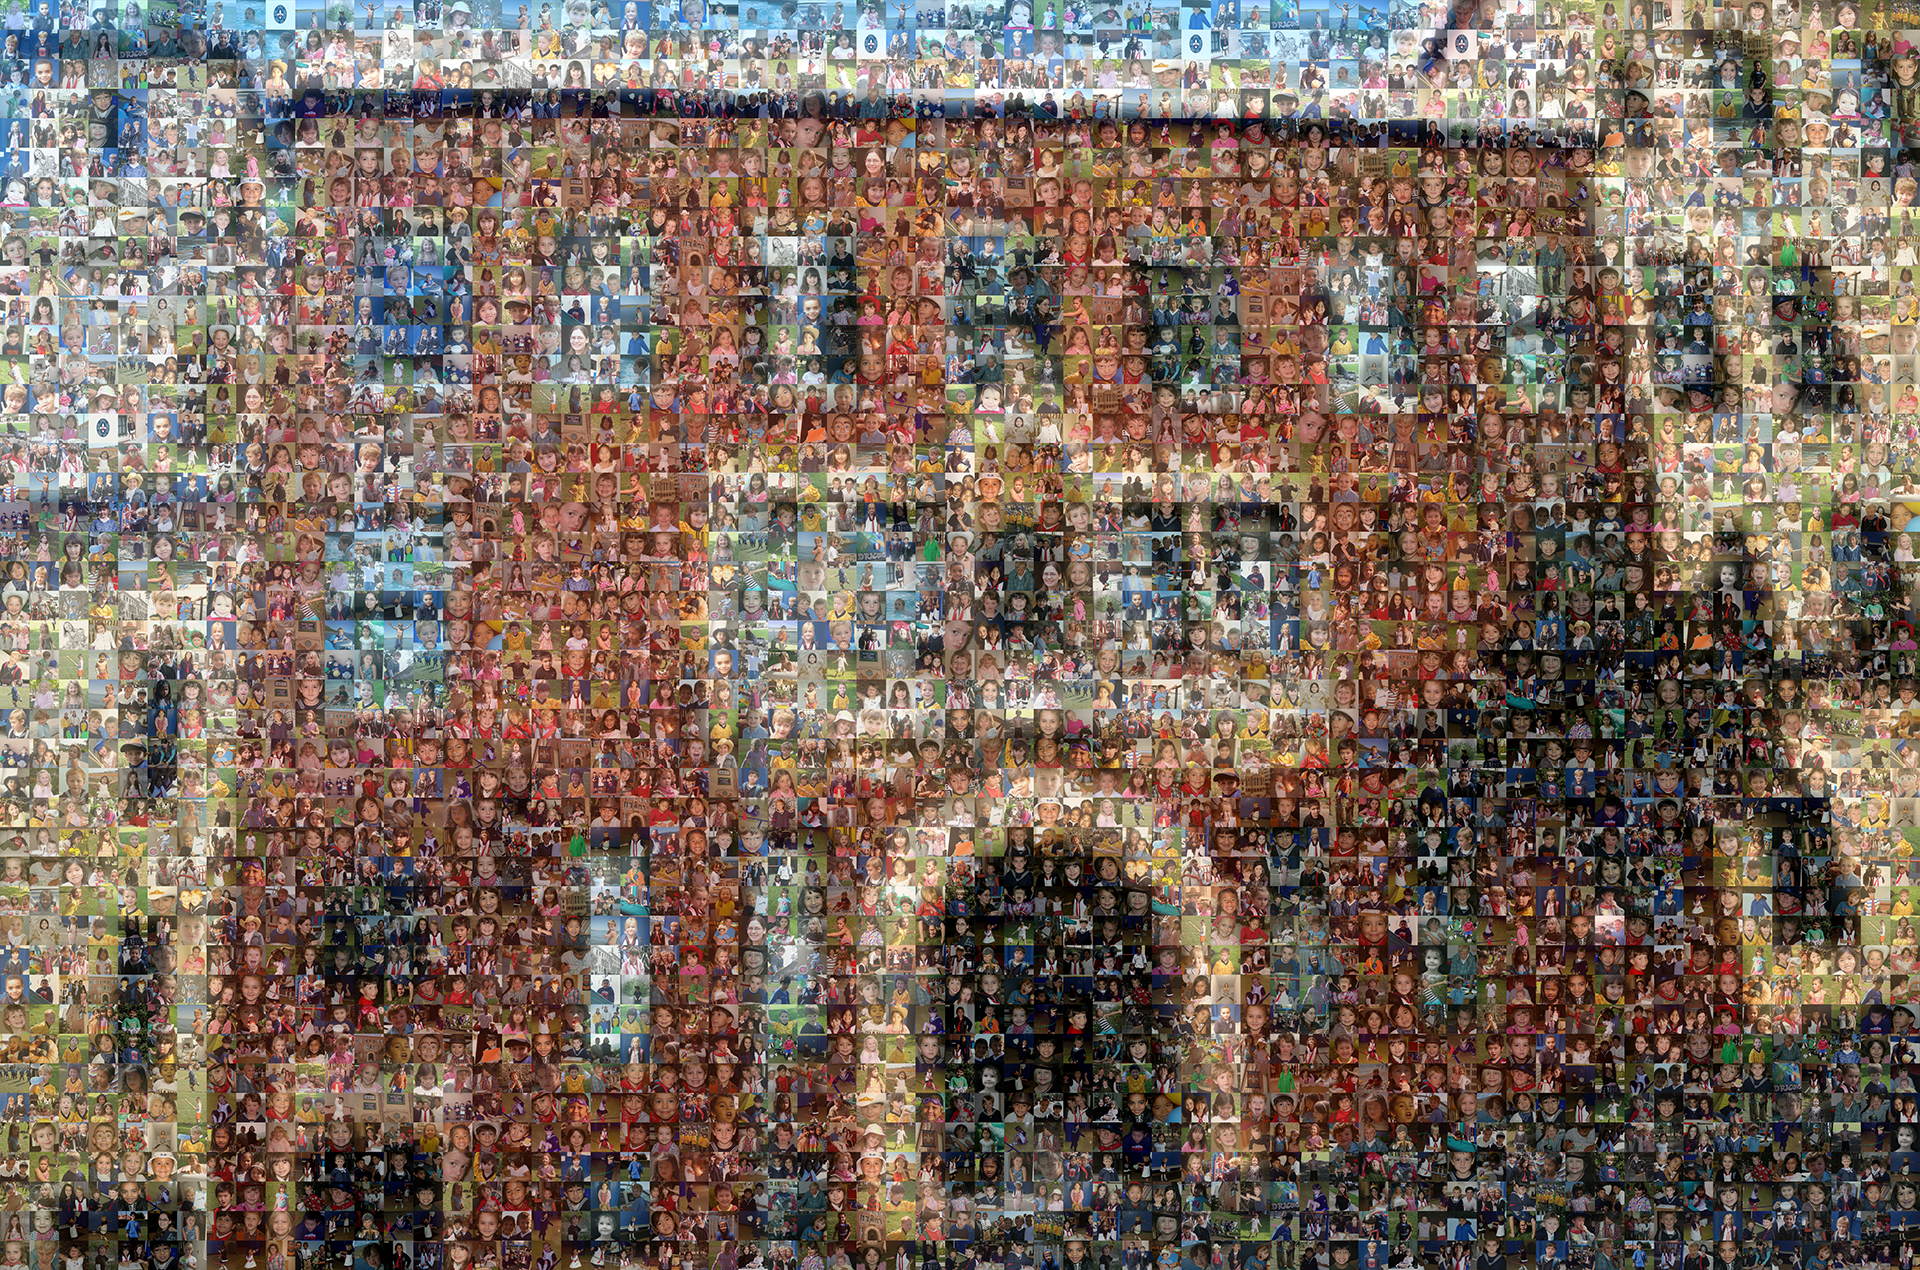 photo mosaic created using 545 photos of youth